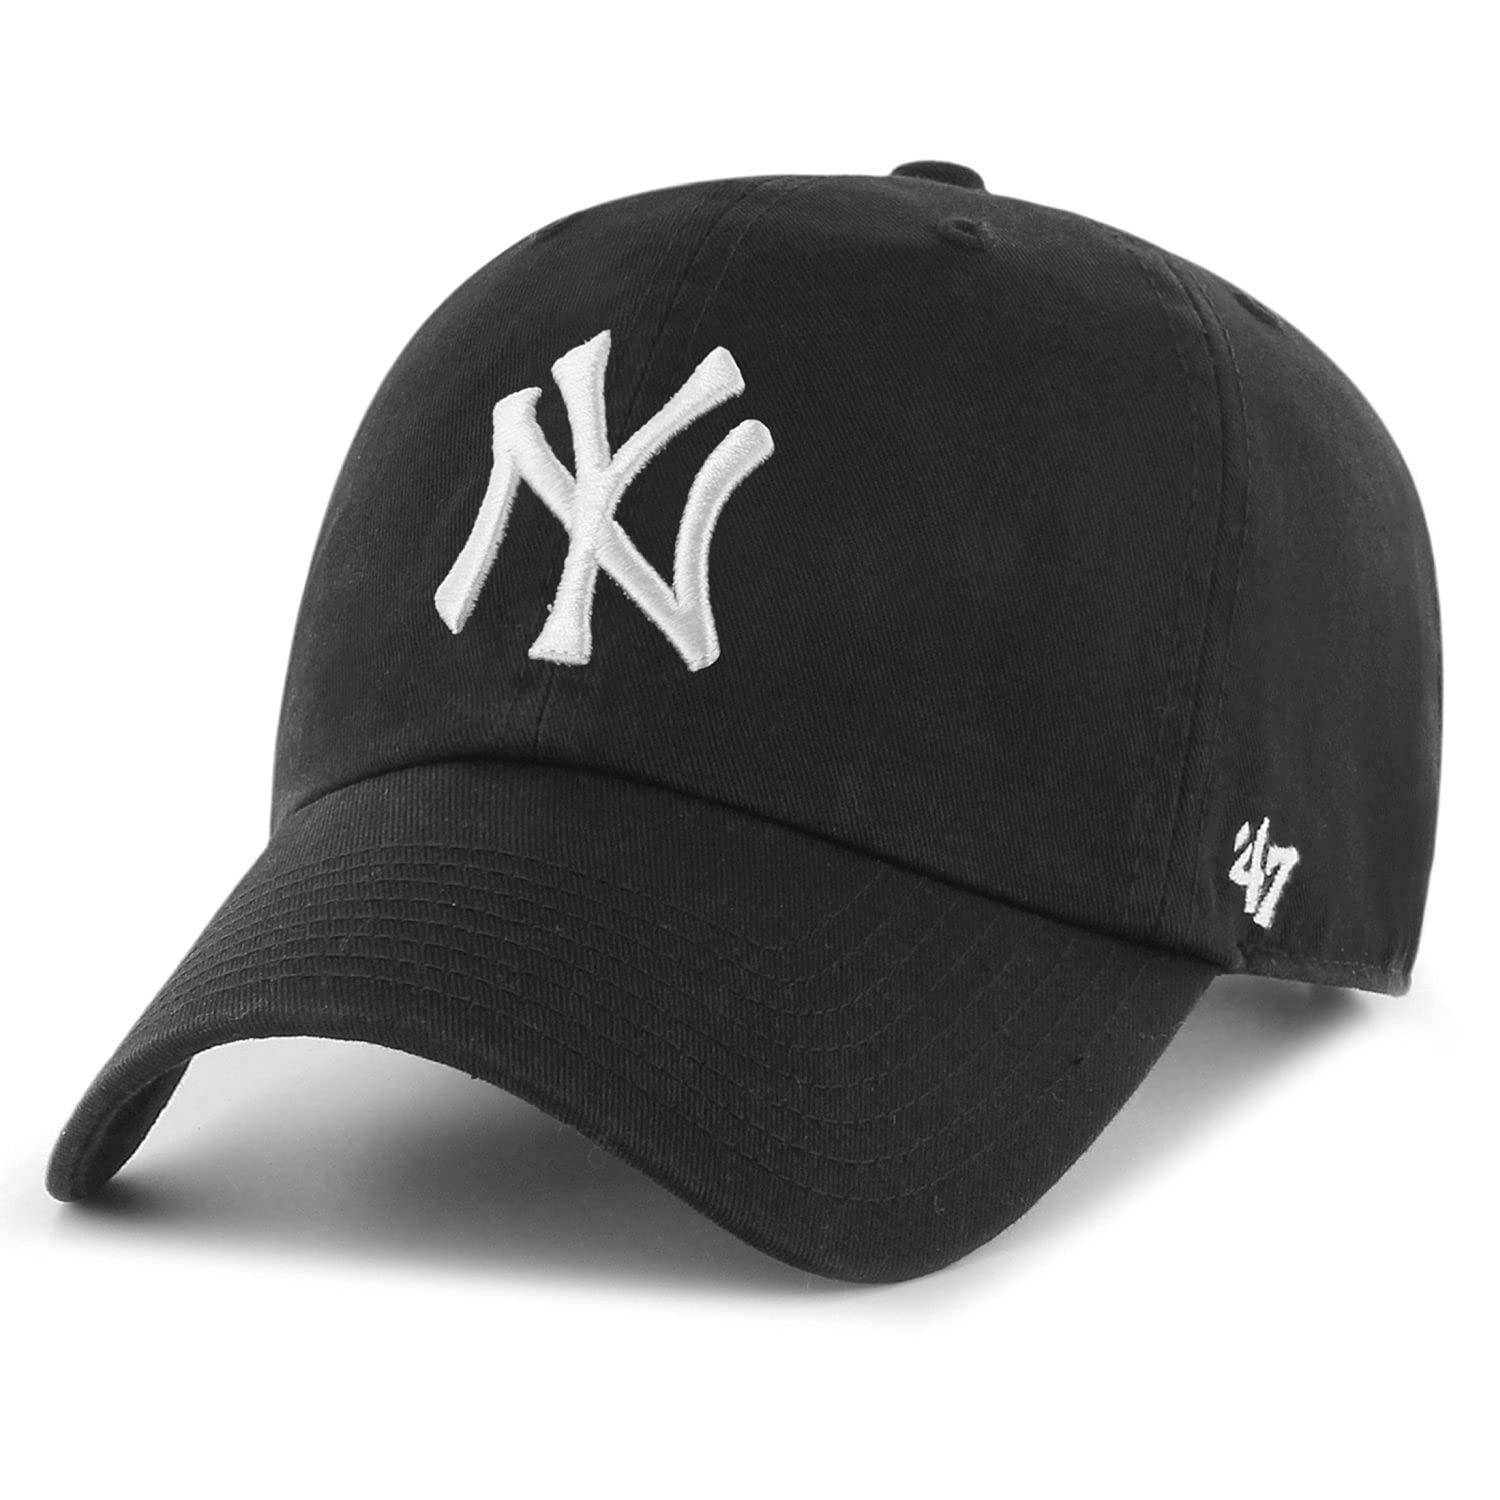 Amazoncom 47 Brand MLB NY Yankees Clean Up Cap  Natural Cream  Sports   Outdoors